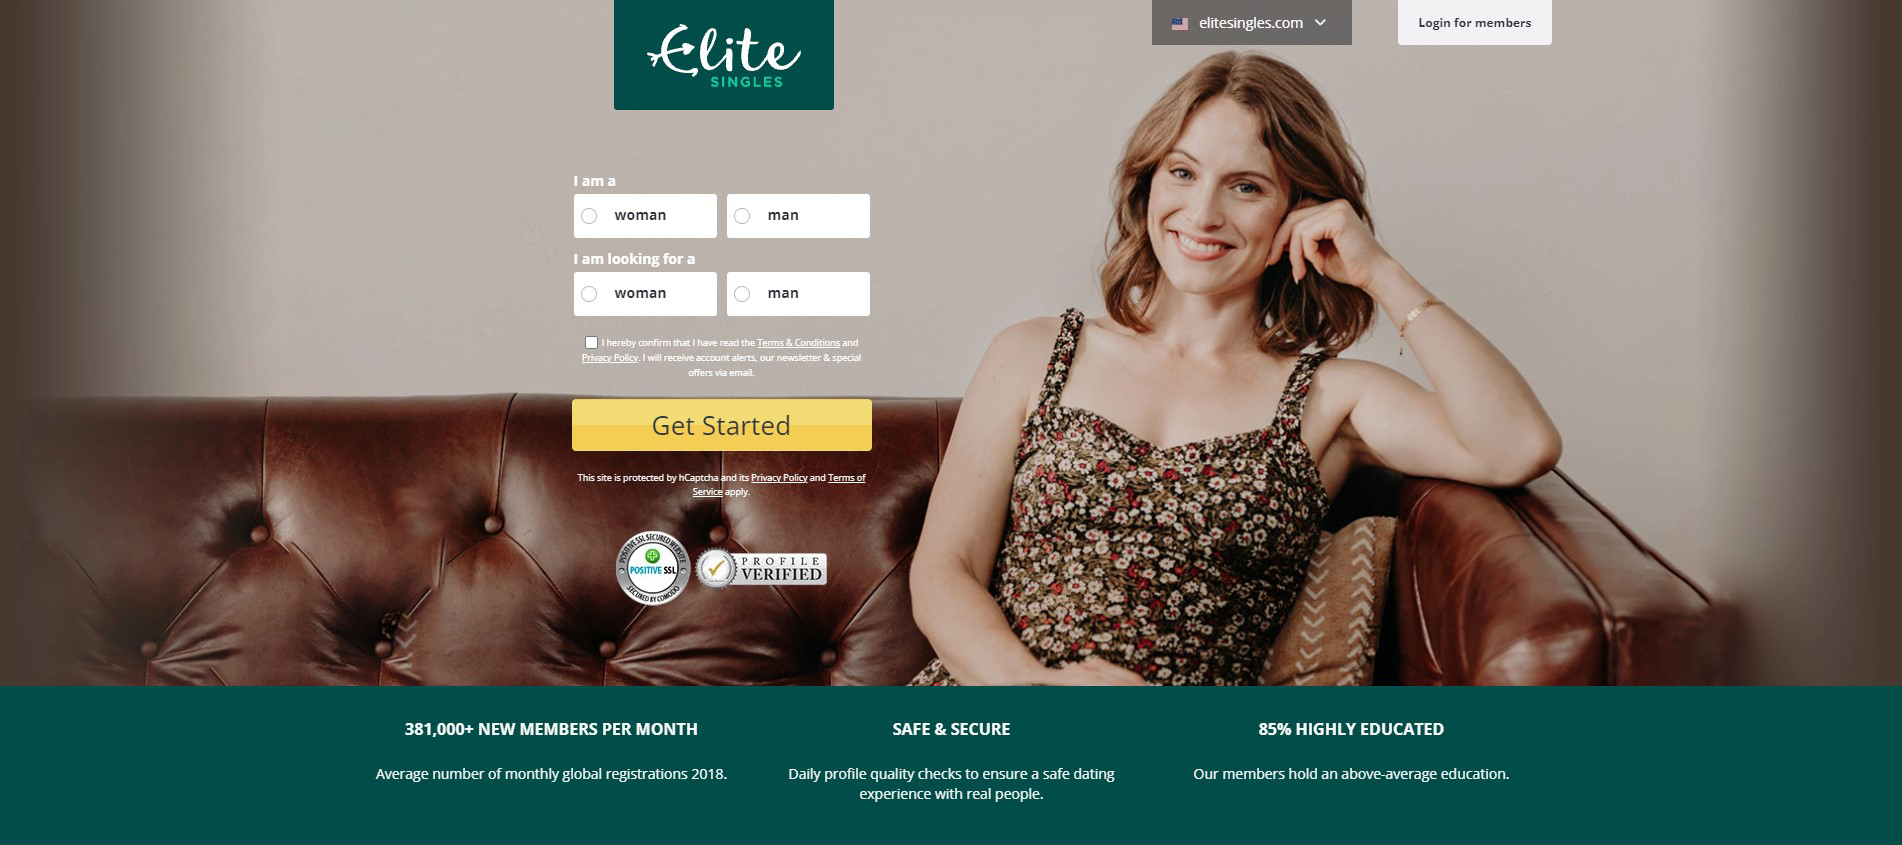 EliteSingles Site Screenshot.